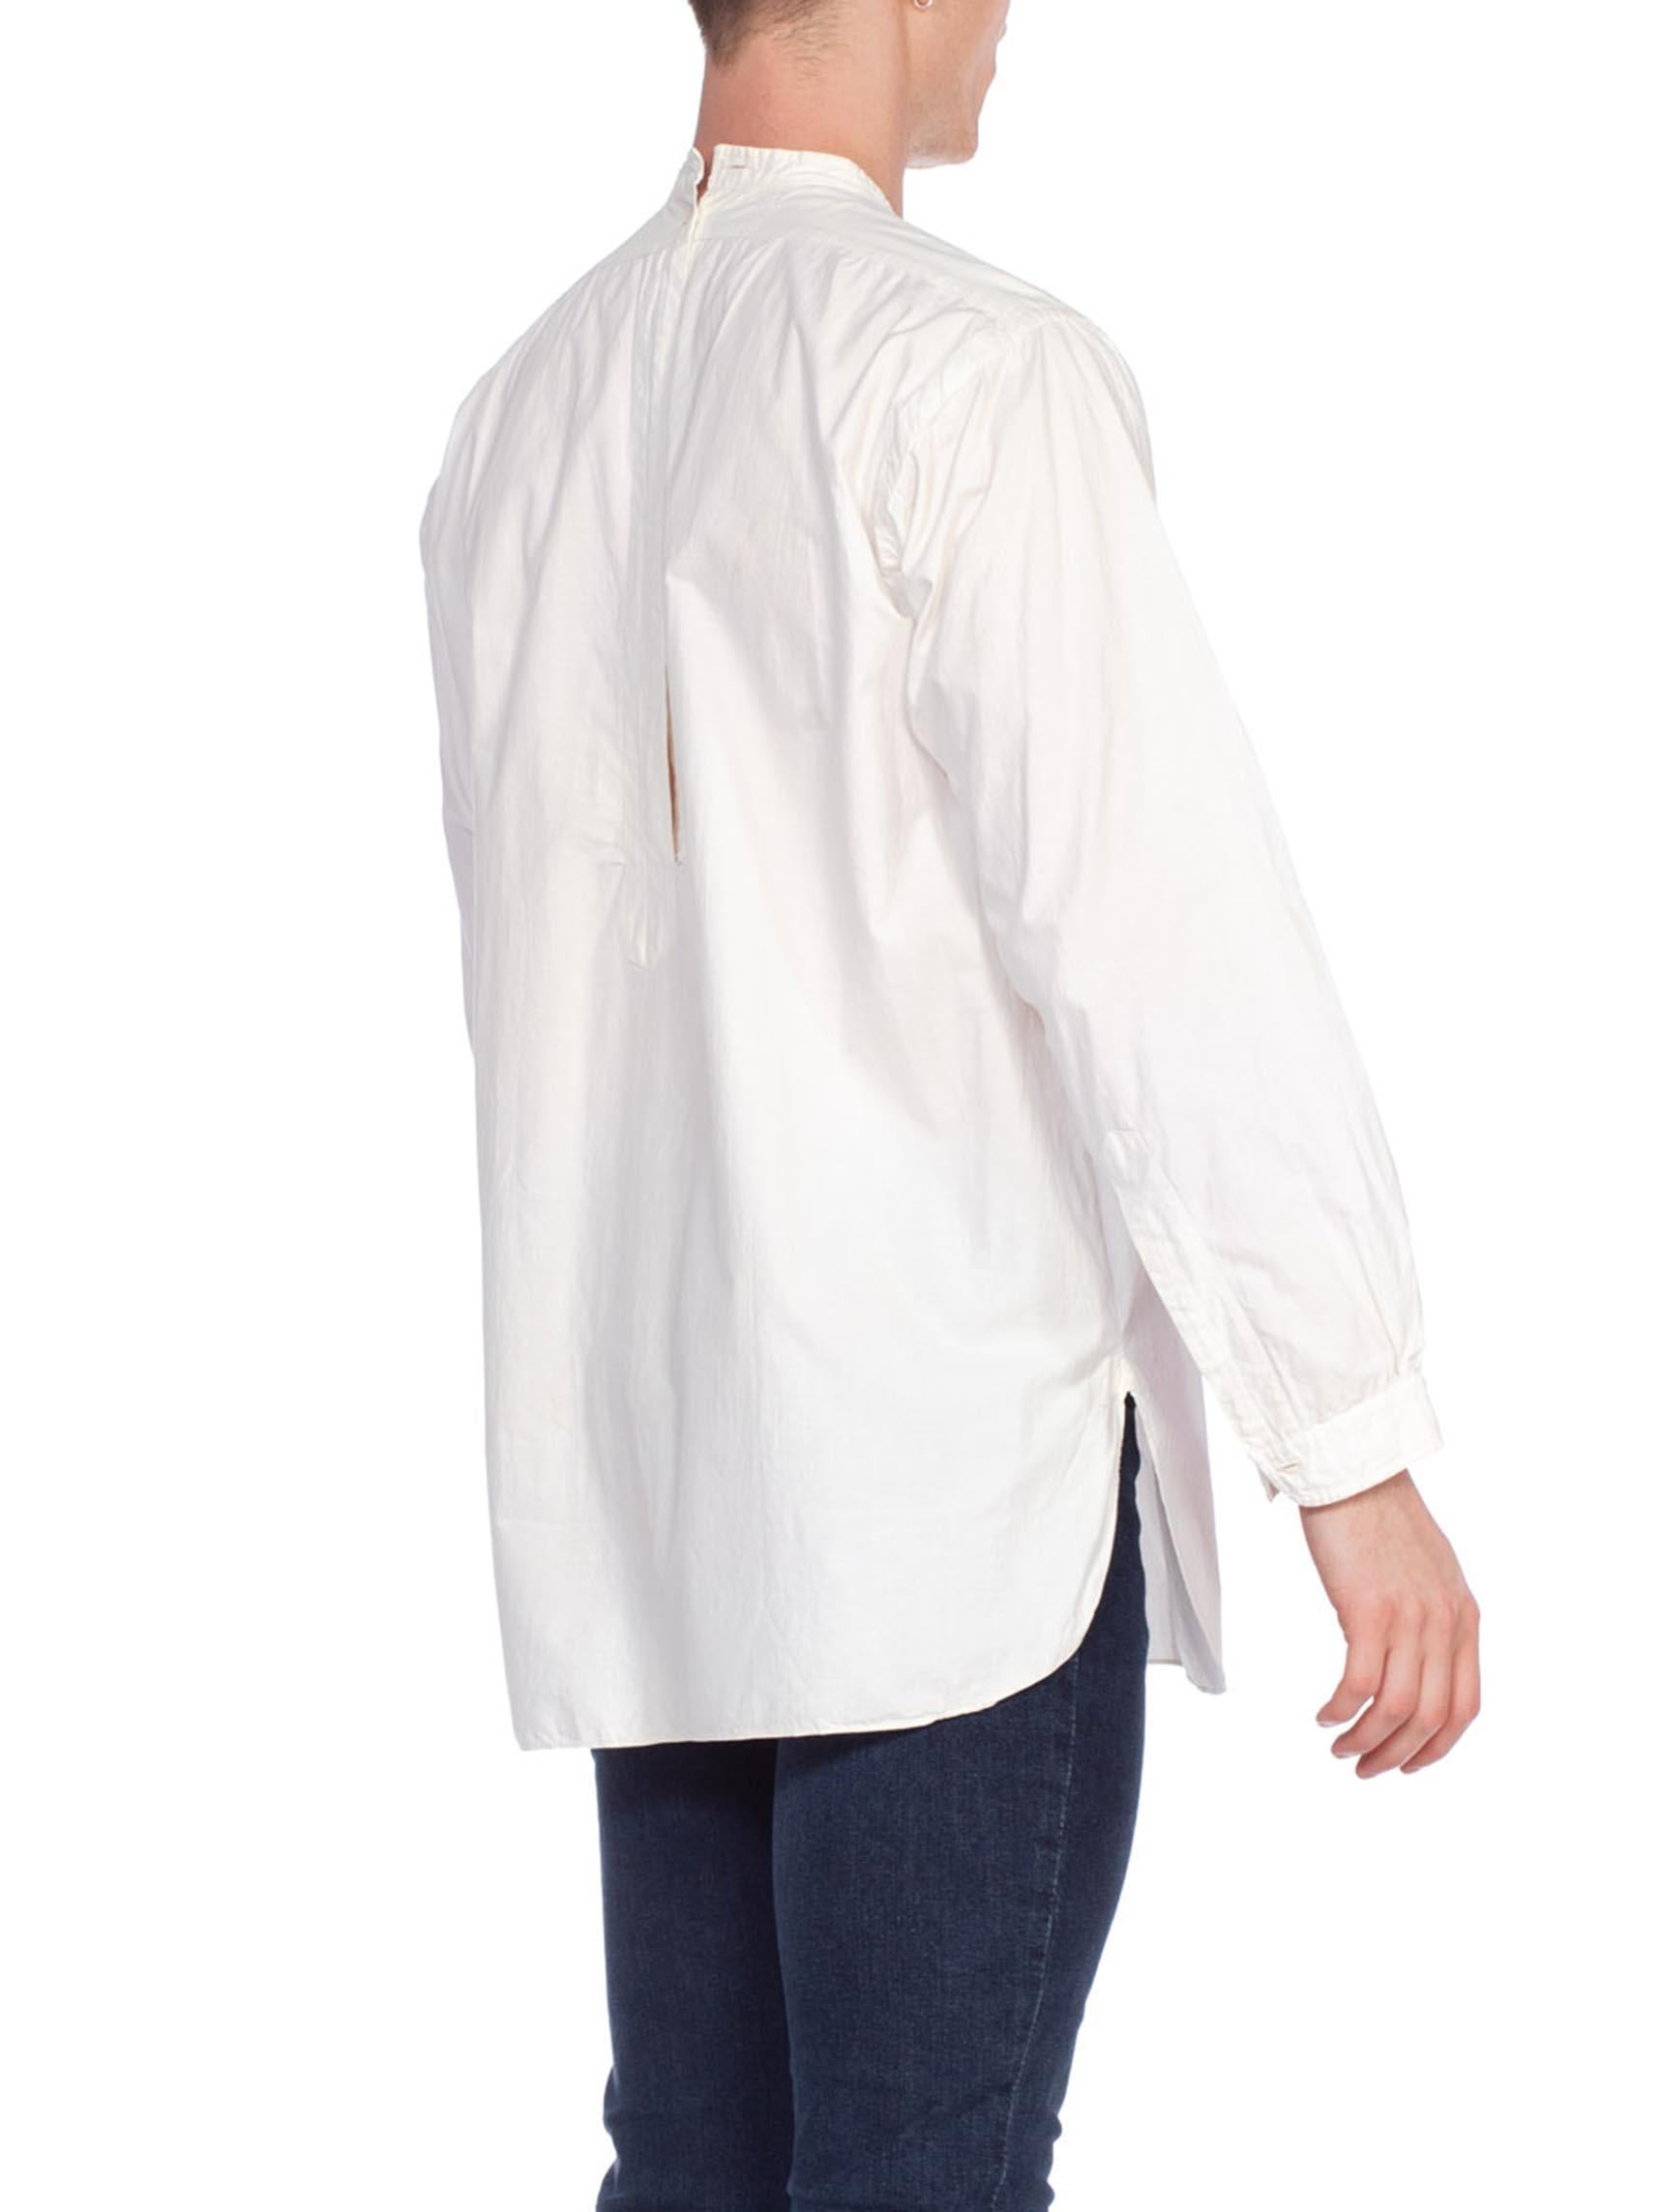 Victorian White Organic Cotton Men's Antique Bib Front Shirt Dated 1880 For Sale 1